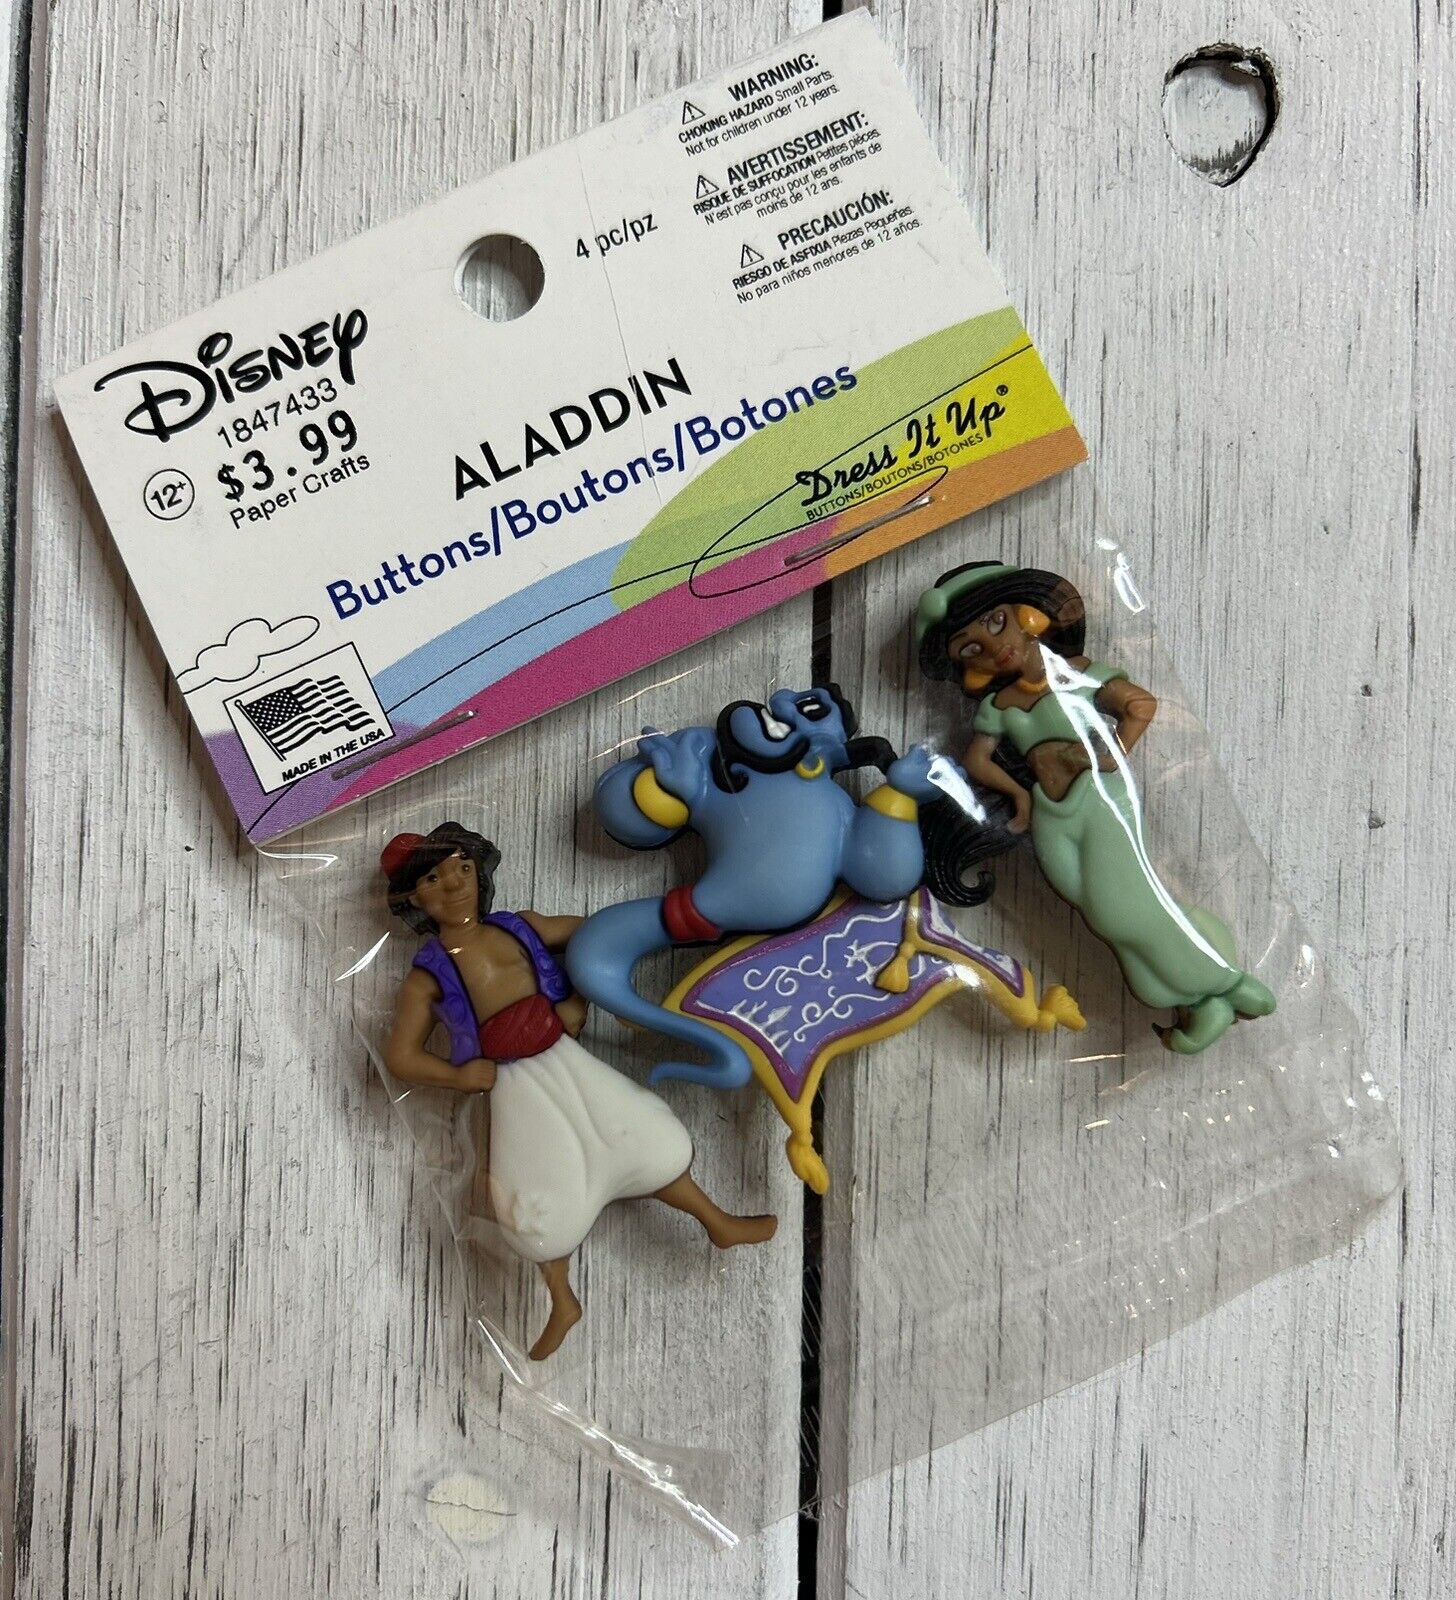 NEW/UNOPENED Disney Aladdin And Jasmine Buttons